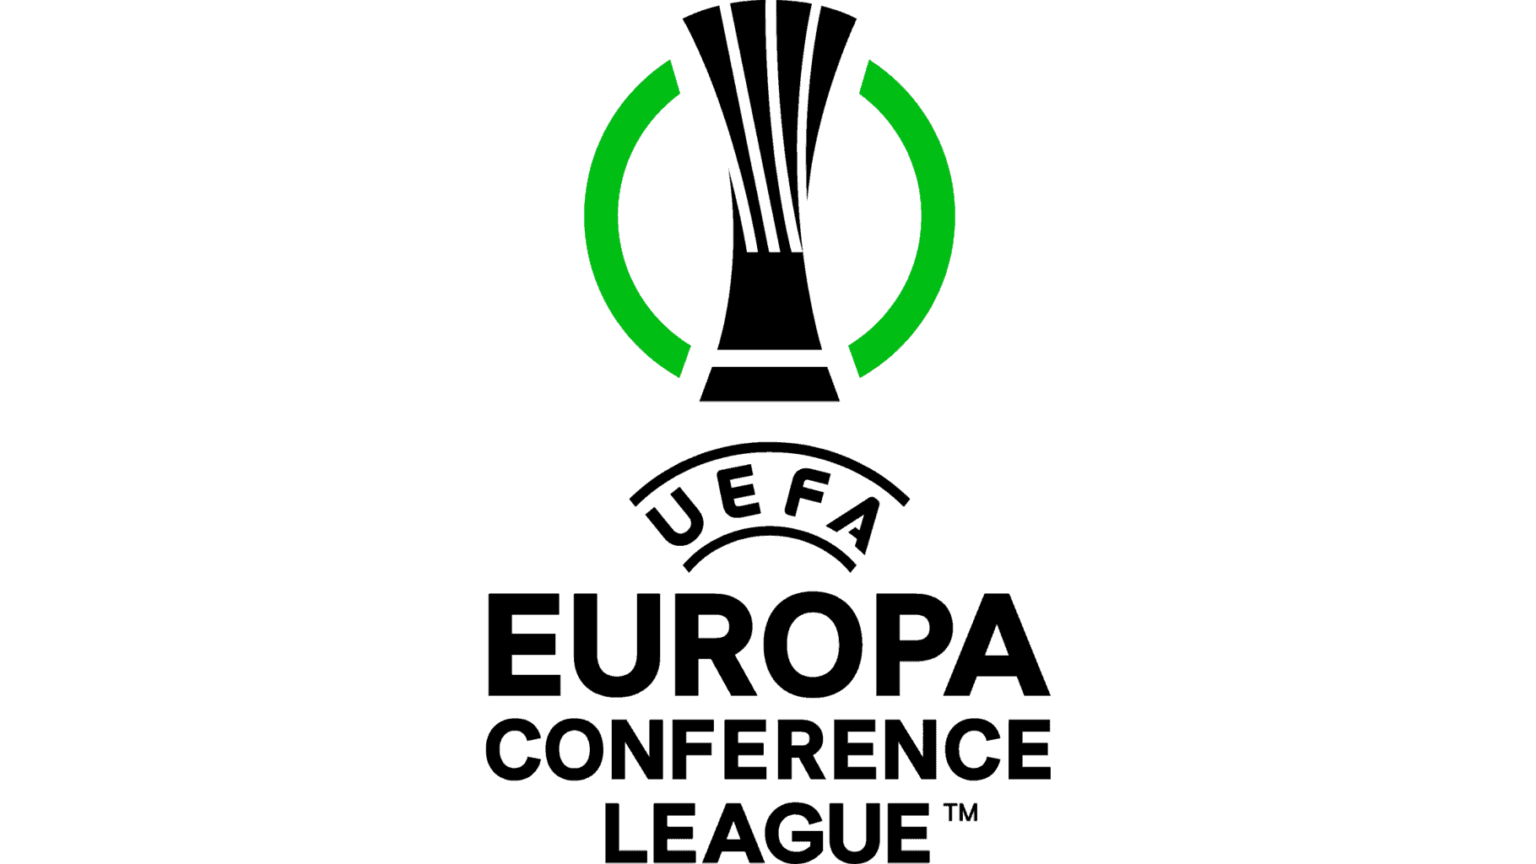 Uefa Conference League Ball / UEFA Europa Conference